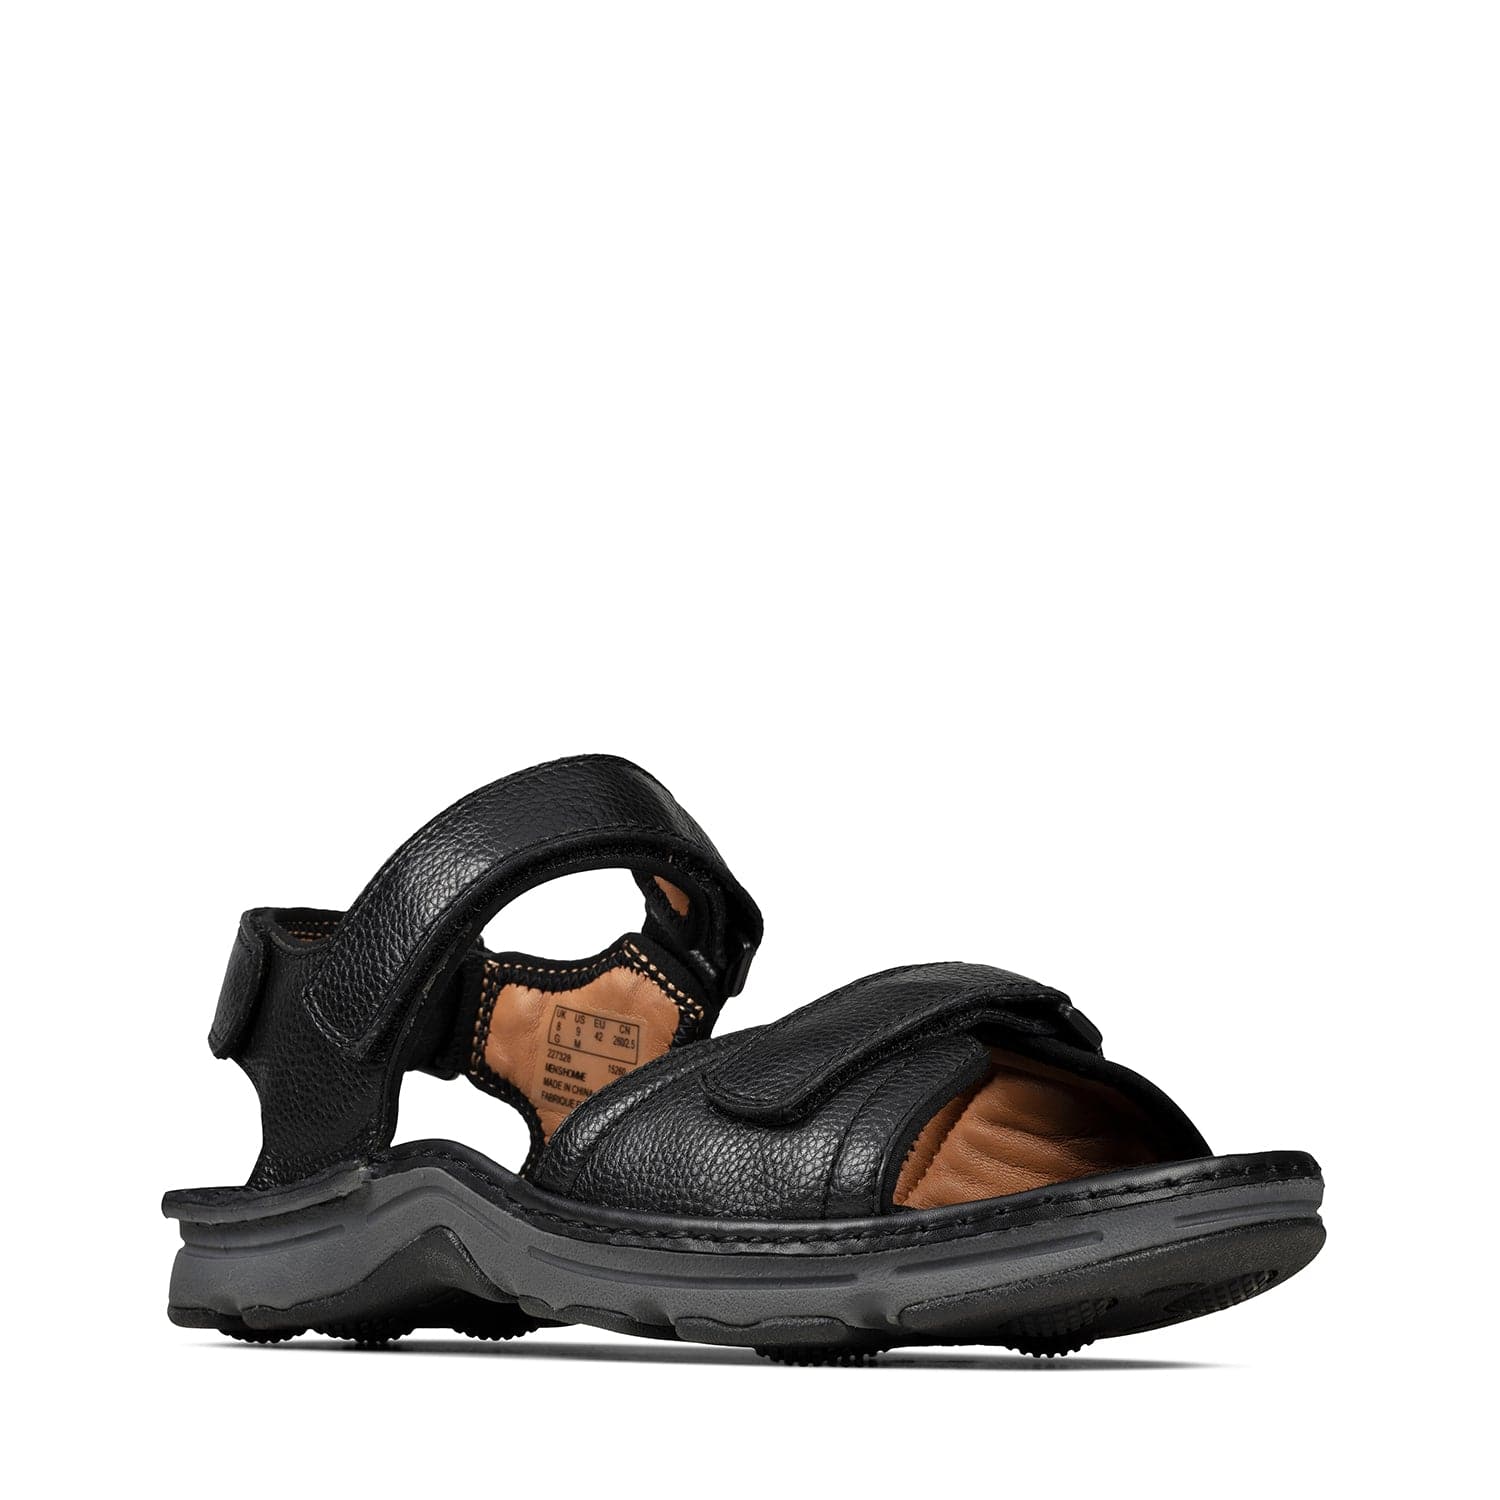 Clarks Atl Part - Sandals - Black - 261519967 - G Width (Standard Fit)